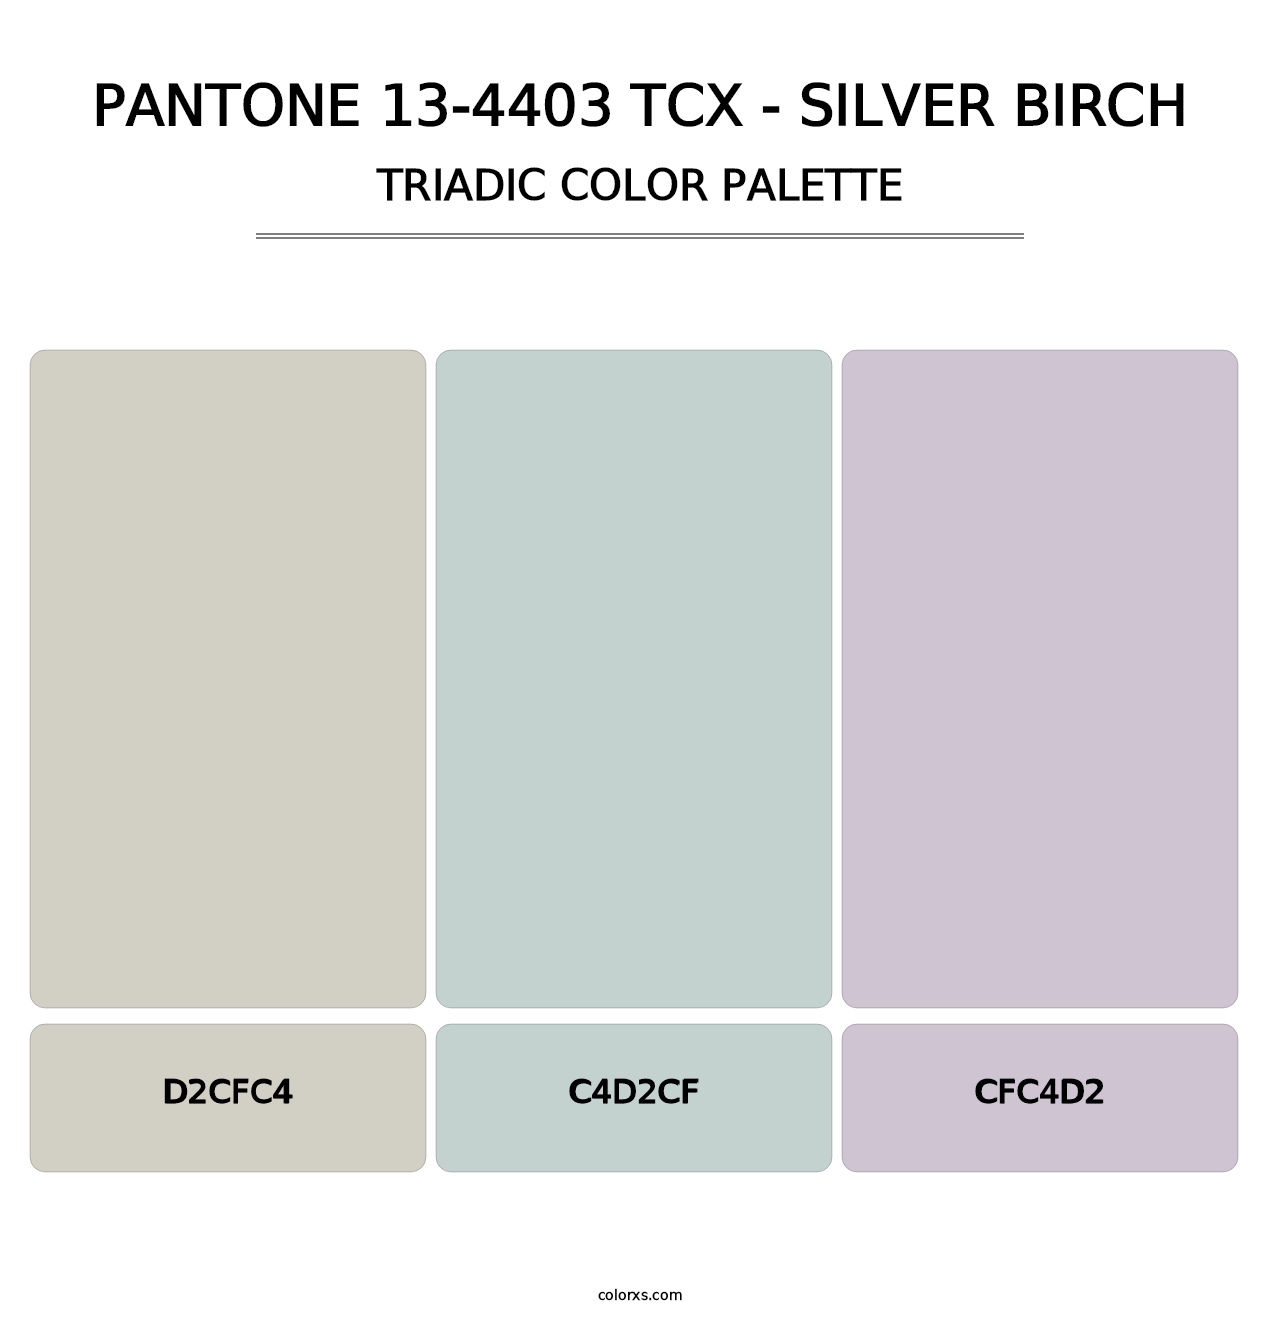 PANTONE 13-4403 TCX - Silver Birch - Triadic Color Palette